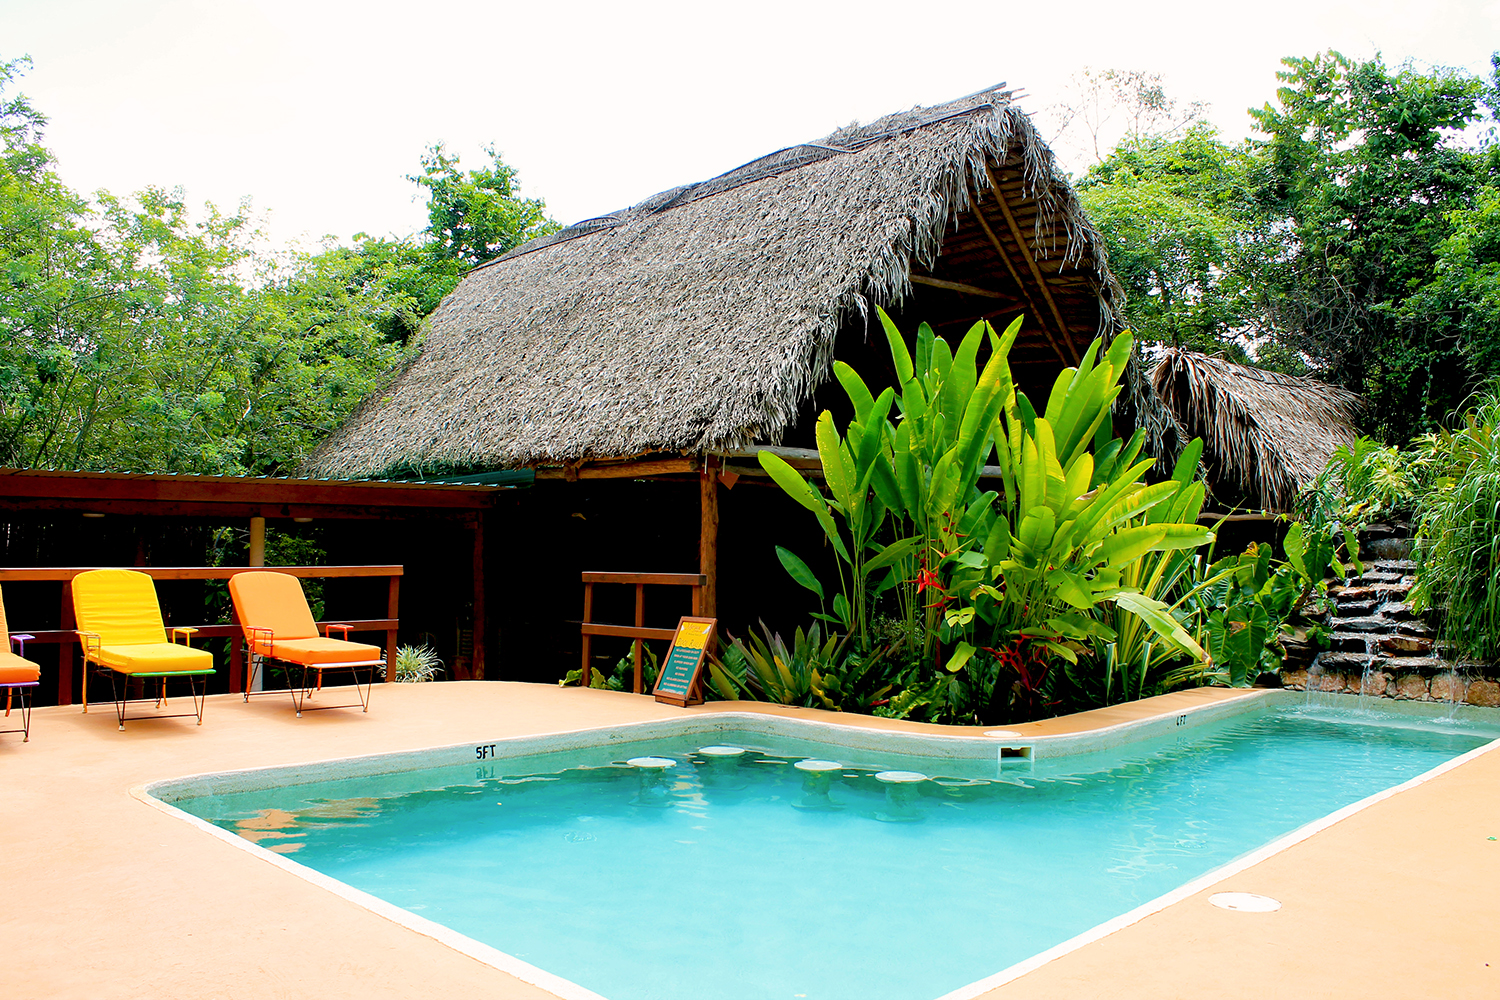 The Mariposa Jungle Lodge pool